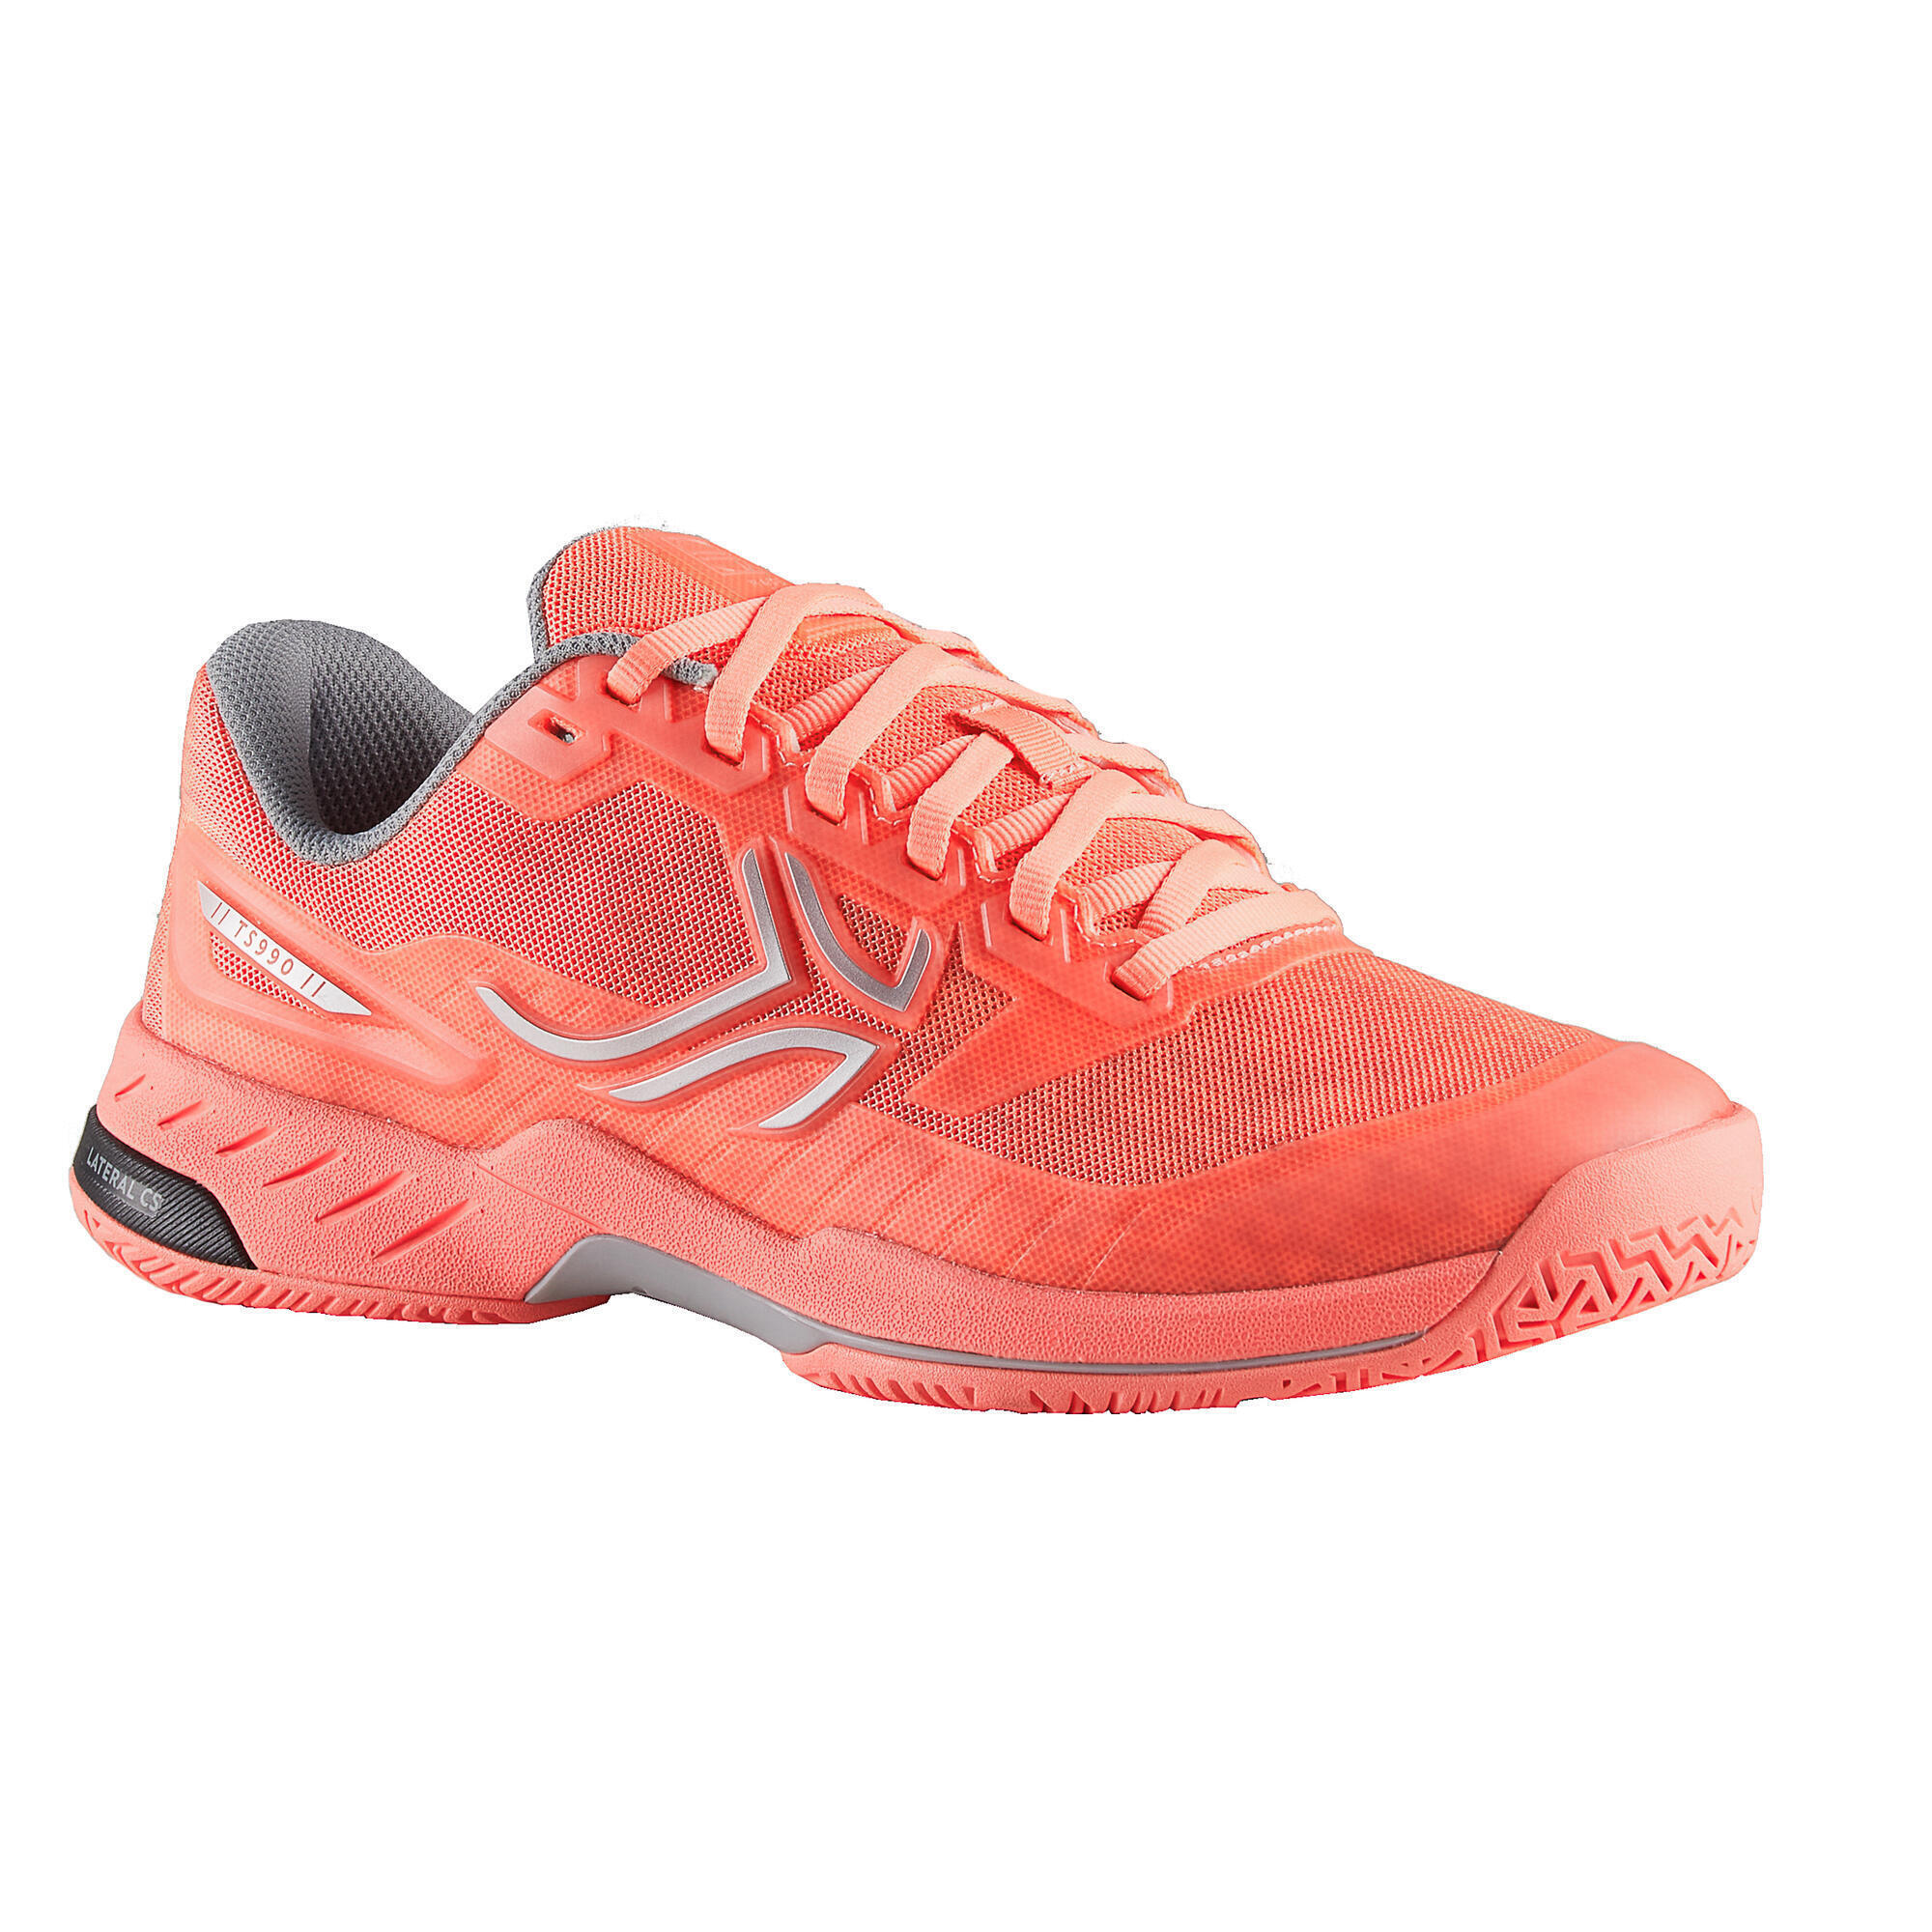 ARTENGO Women's Tennis Shoes TS990 - Coral